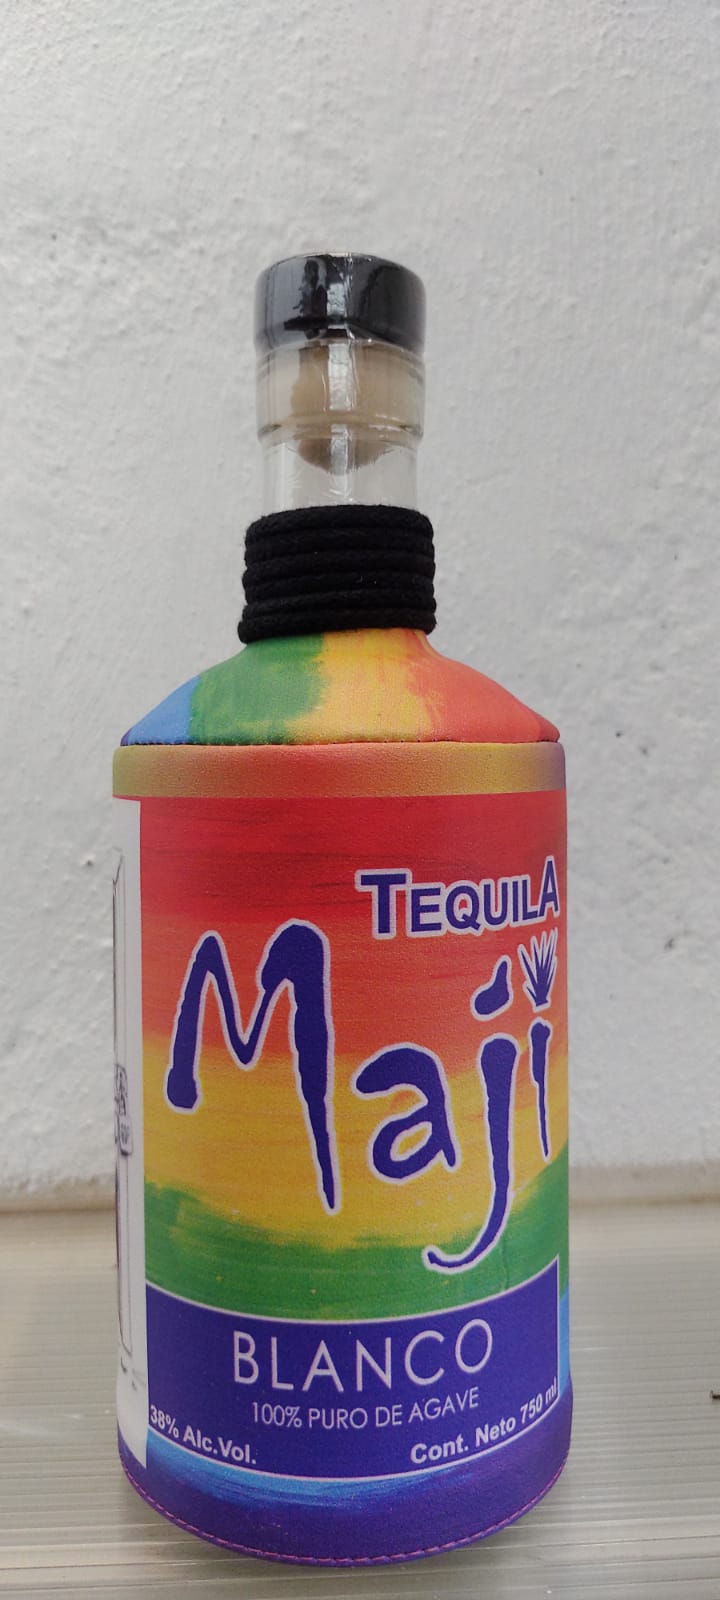 Tequila Maji Blanco 100% Agave - 750ml  FORRADA